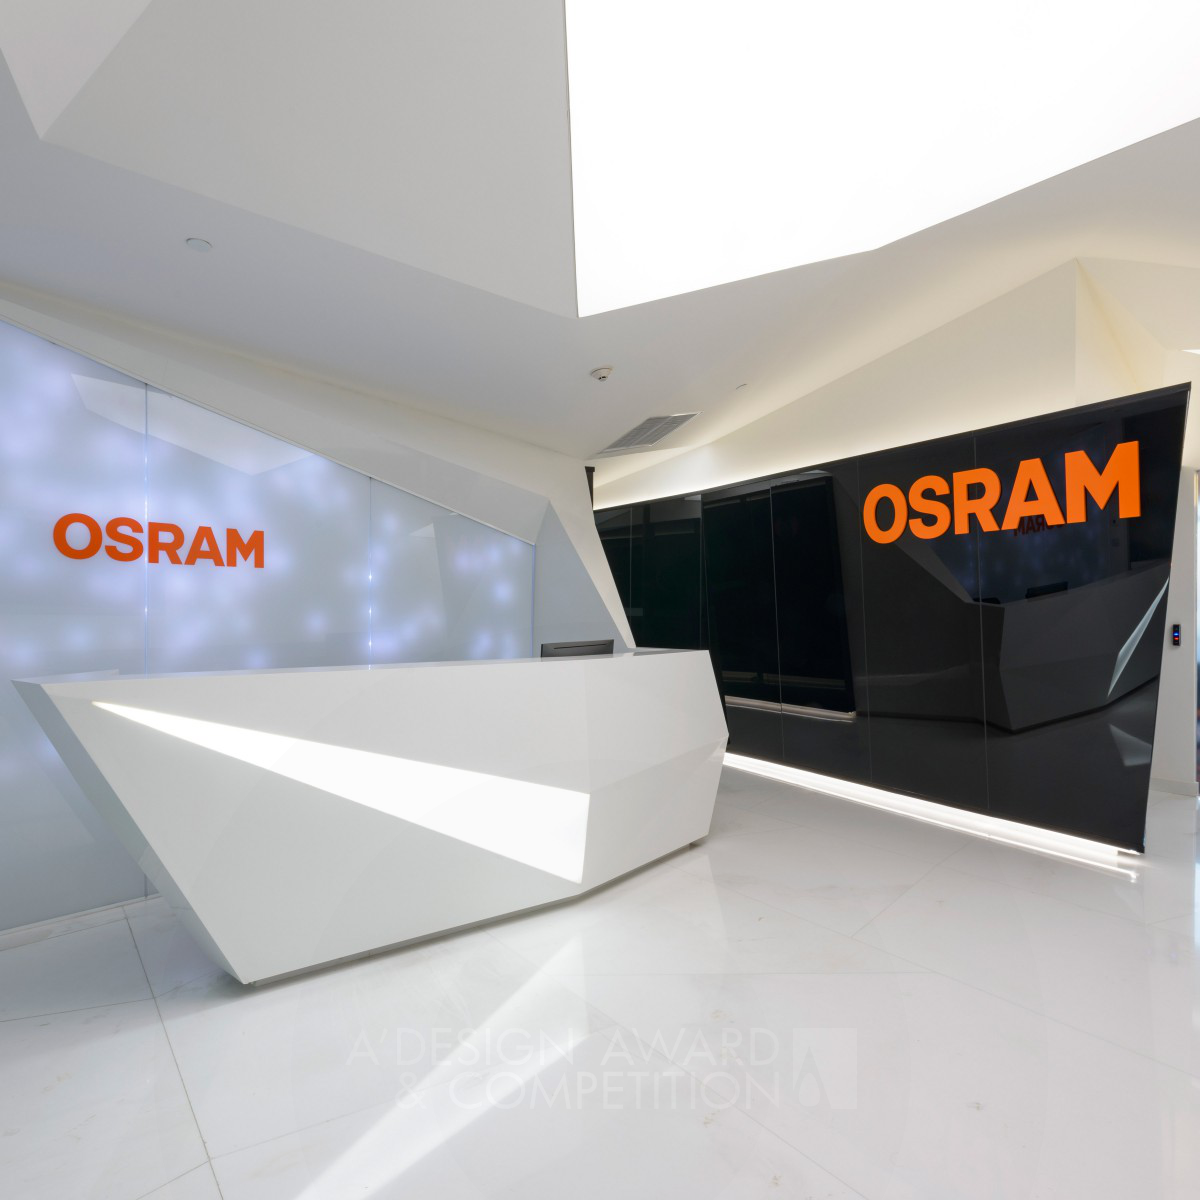 Osram top tier work environment by Juan Carlos Baumgartner